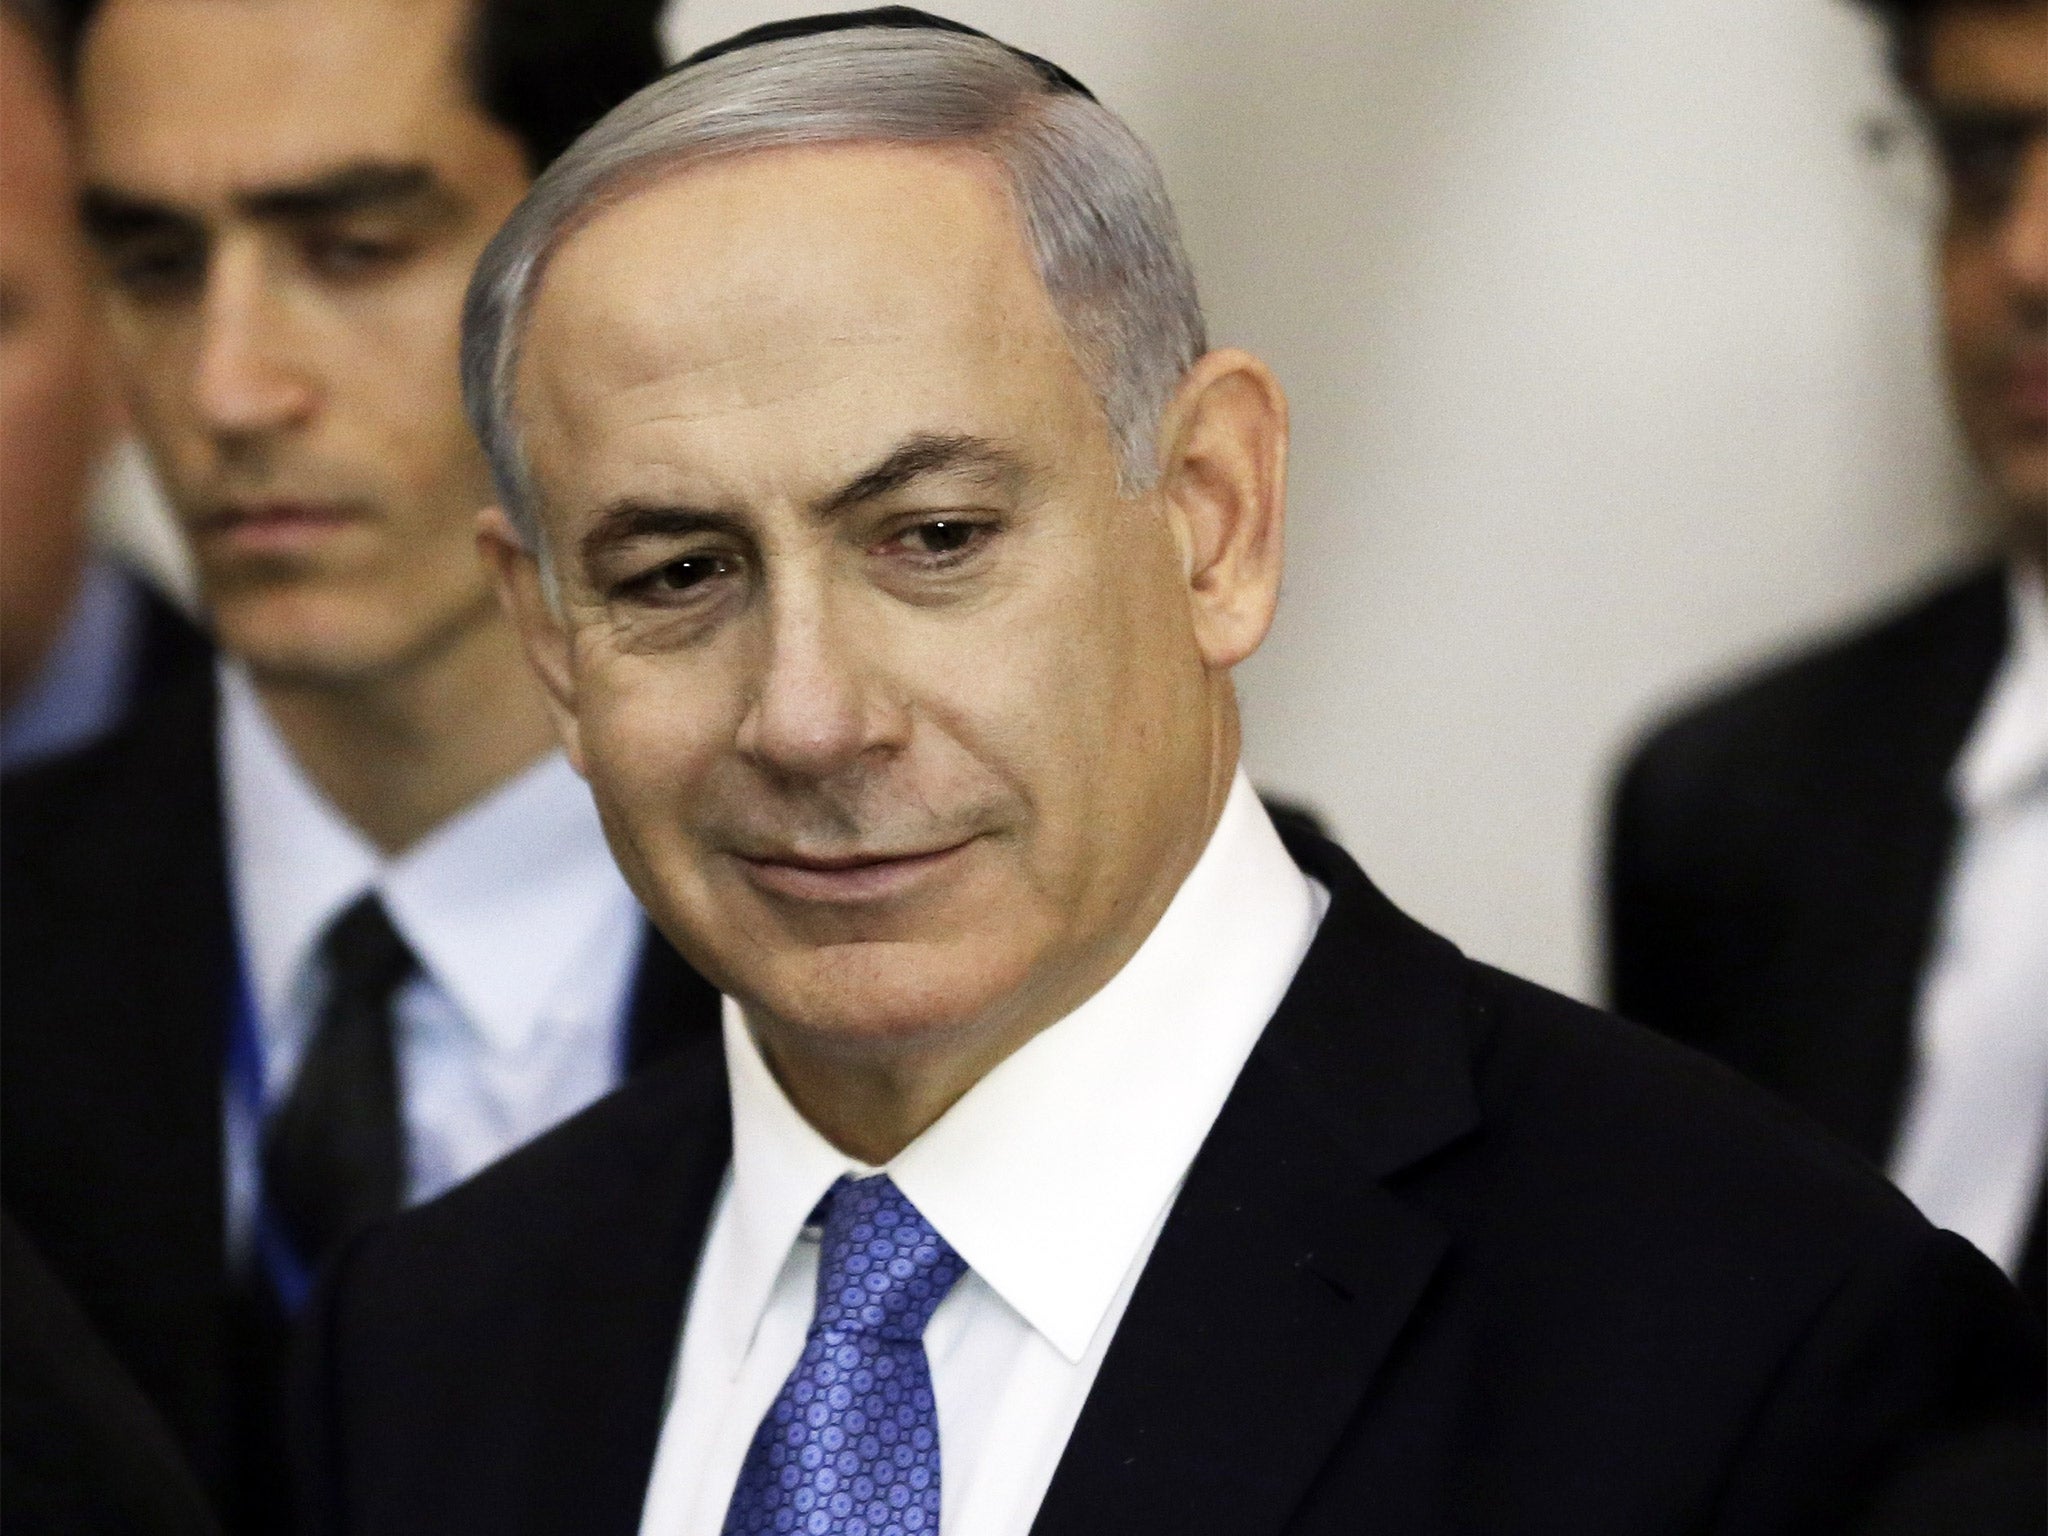 Uncompromising language: Benjamin Netanyahu